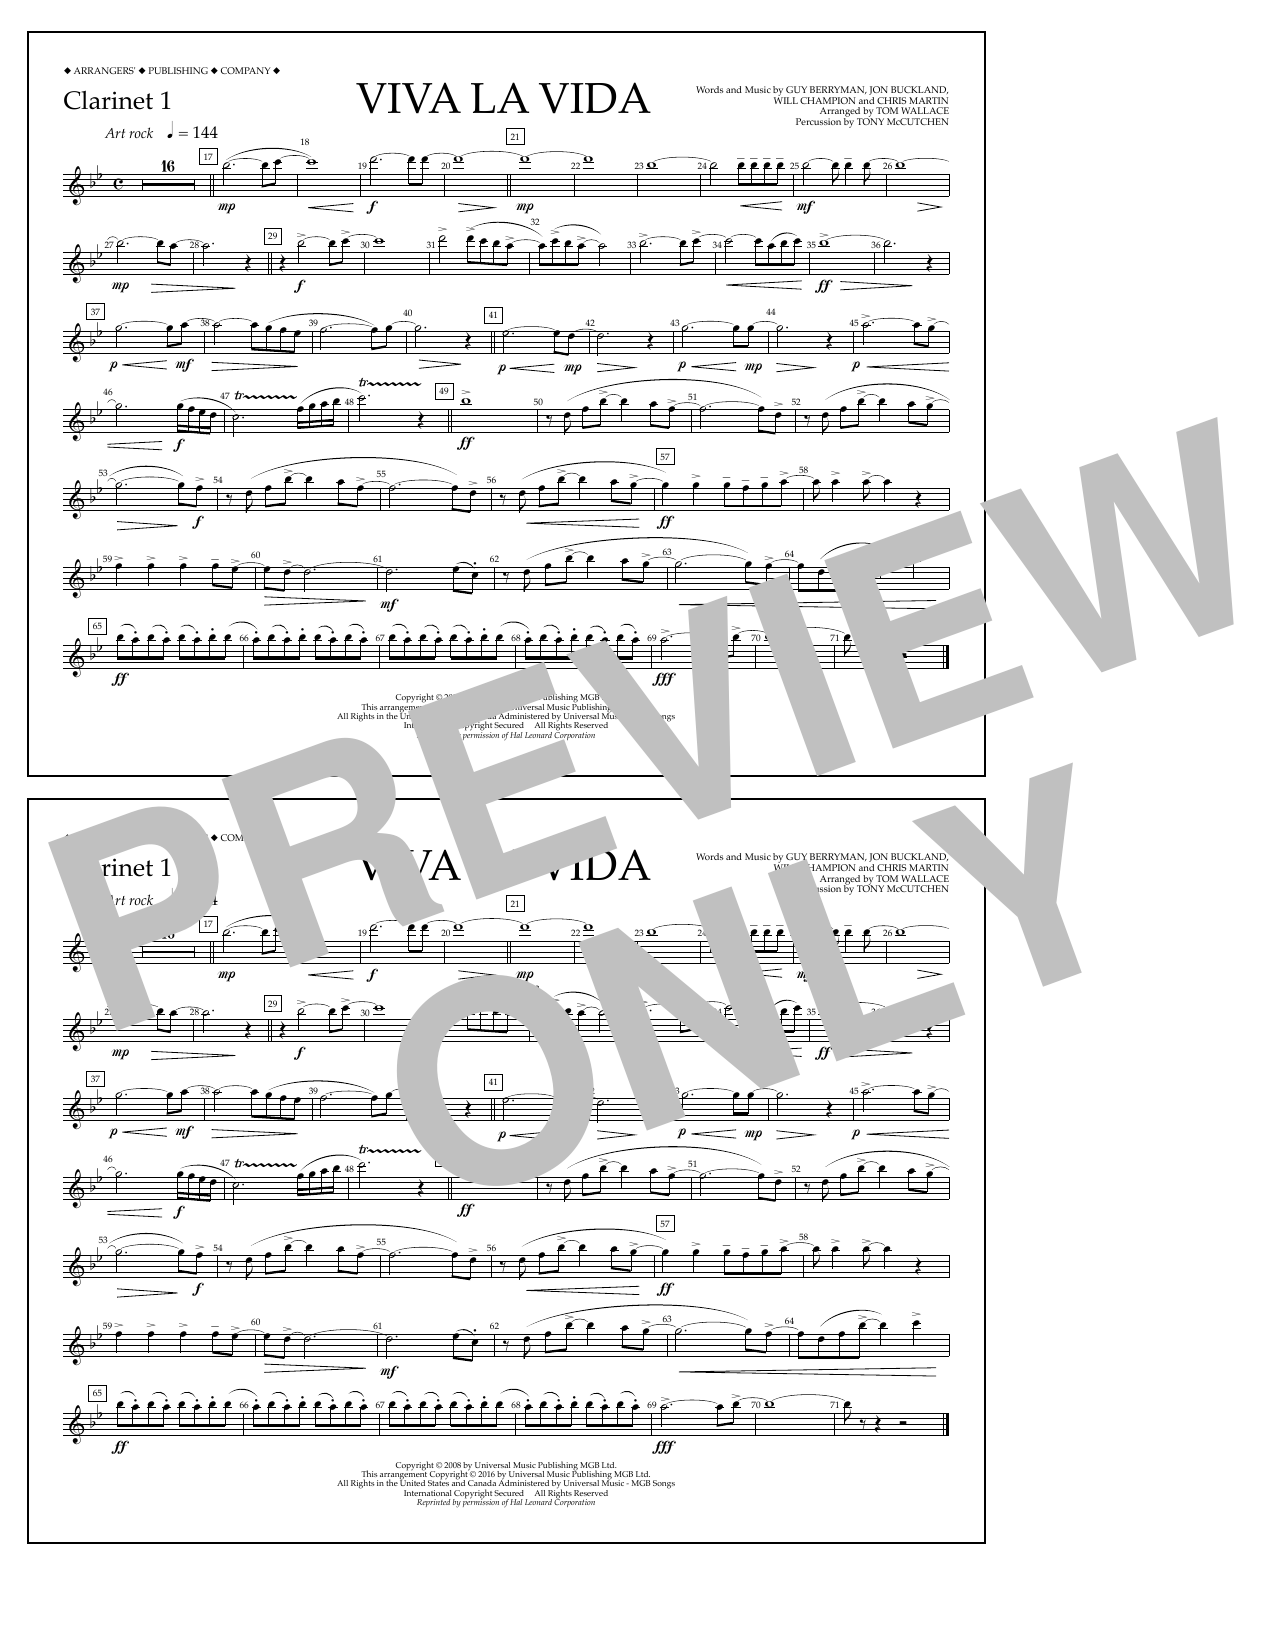 Tom Wallace Viva La Vida - Clarinet 1 Sheet Music Notes & Chords for Marching Band - Download or Print PDF